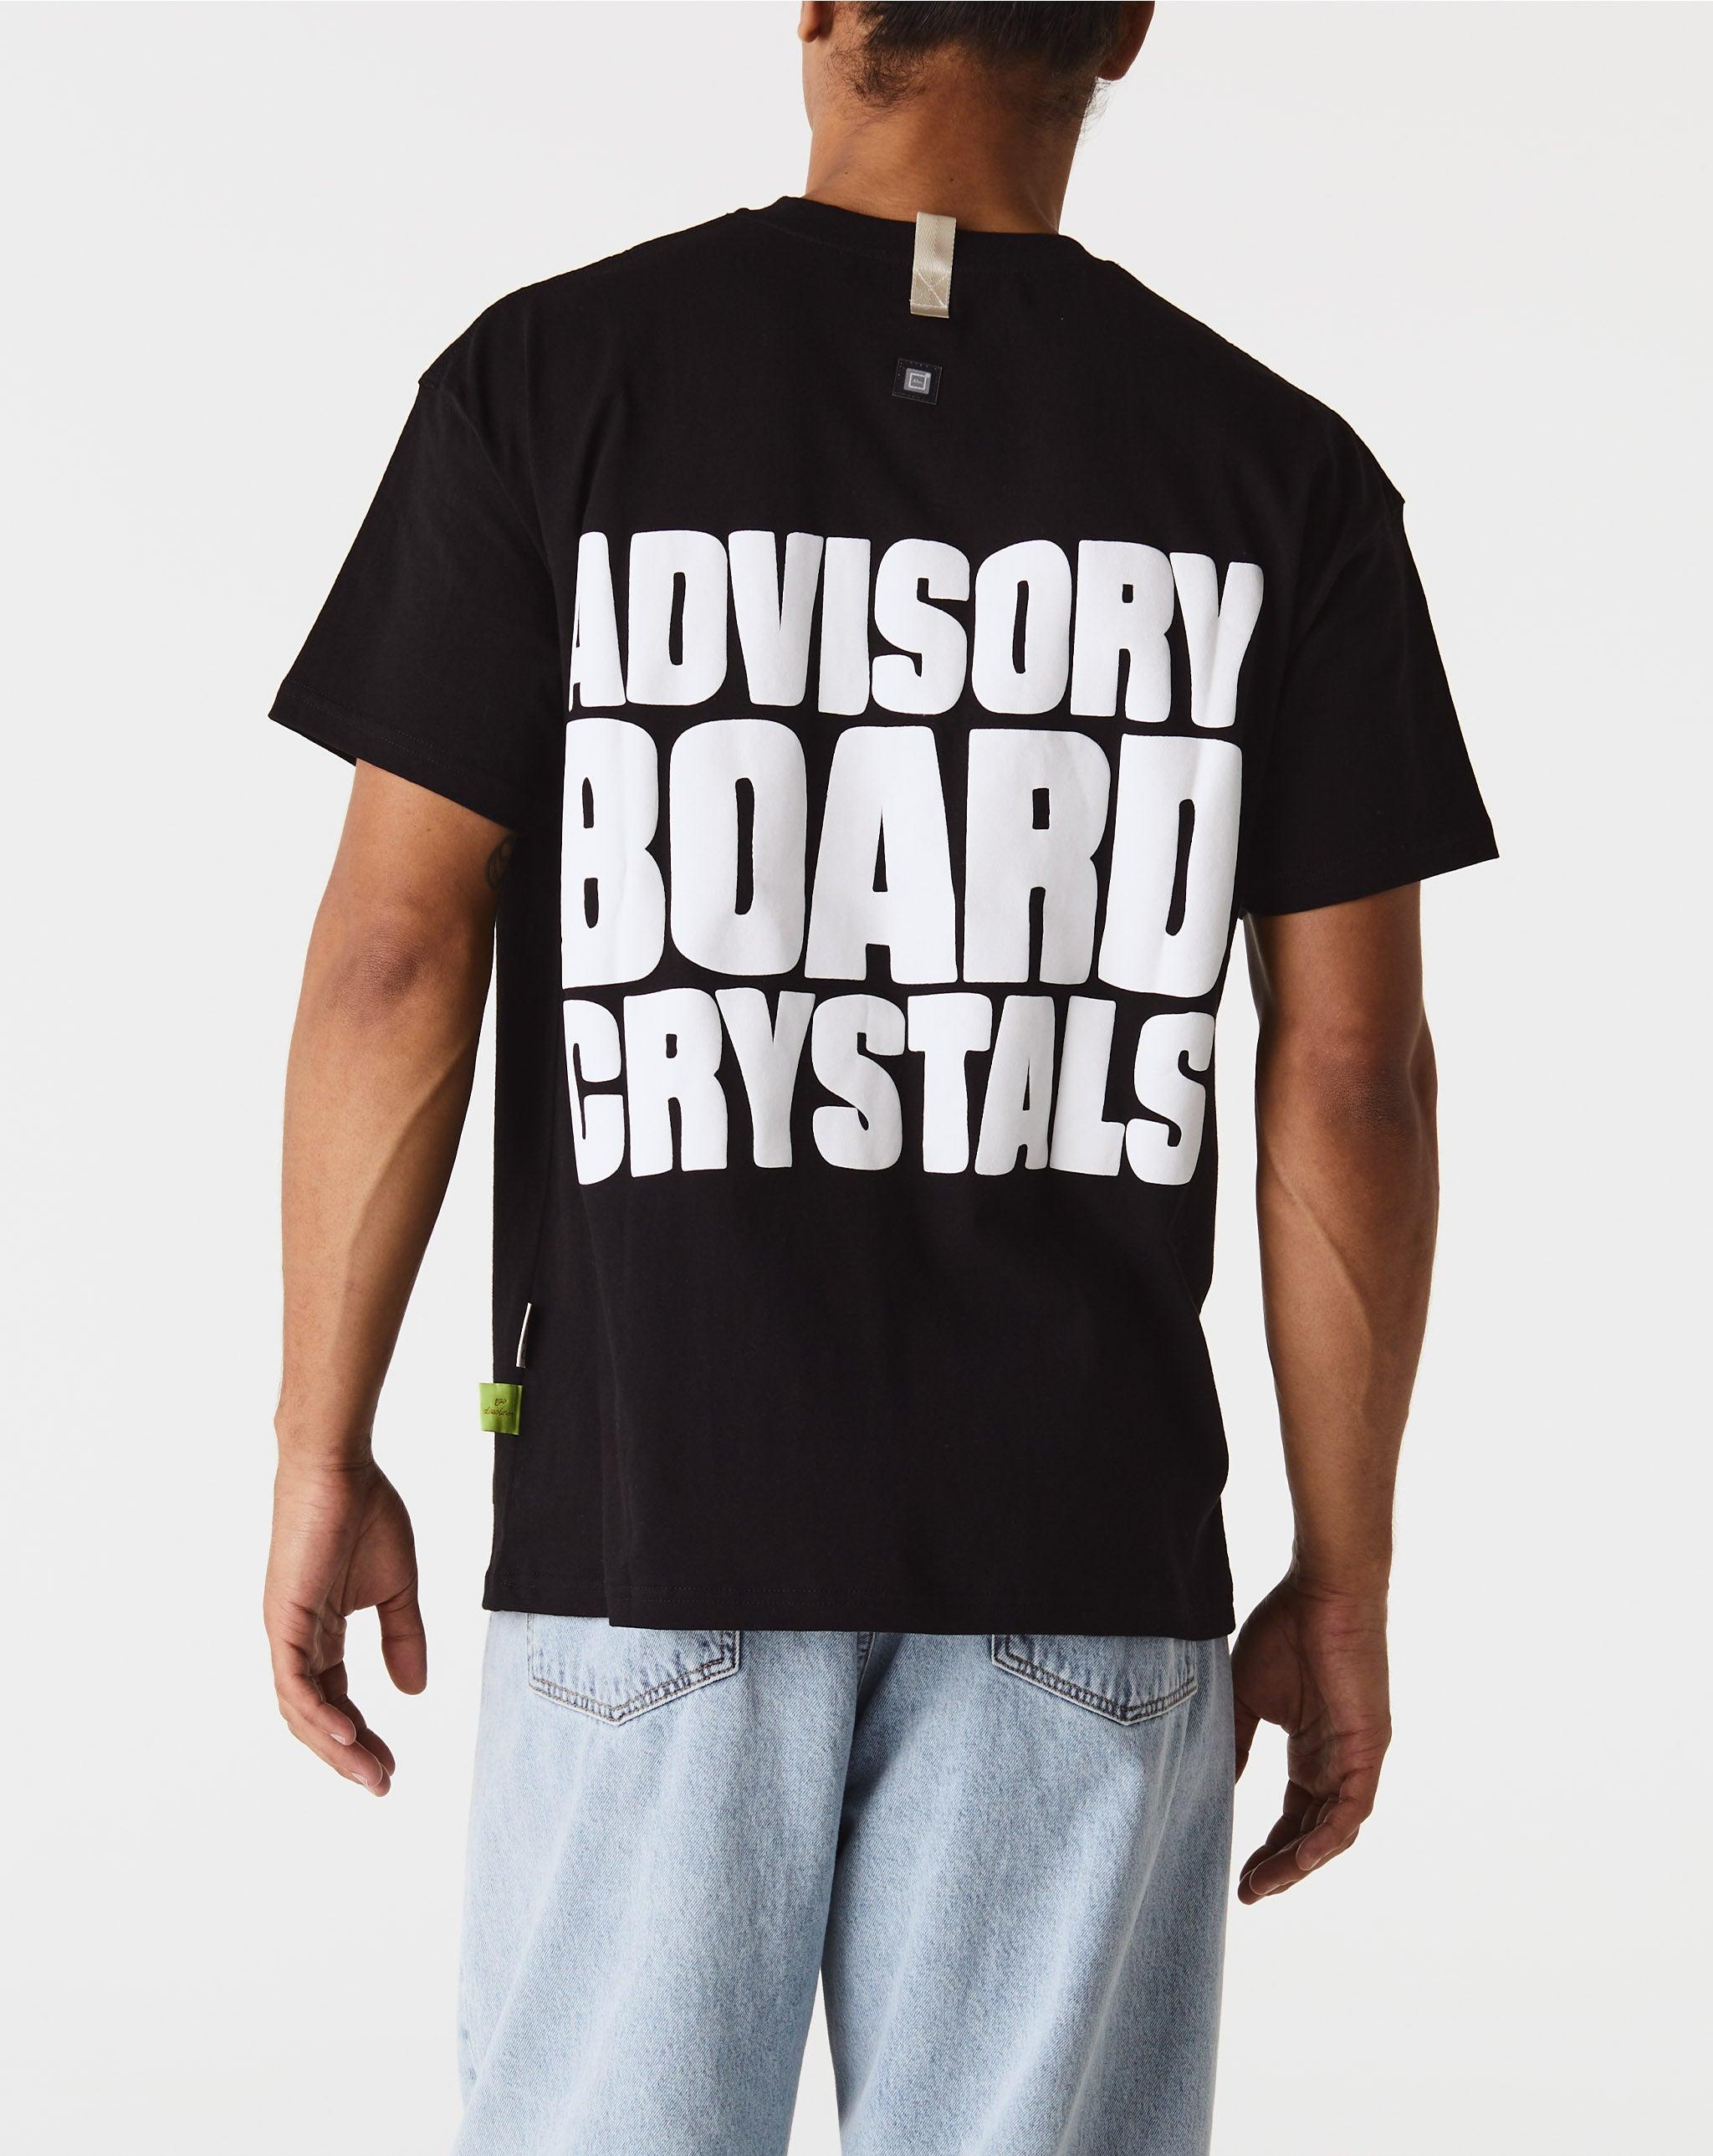 Advisory Board Crystals Abc. Choices T-Shirt